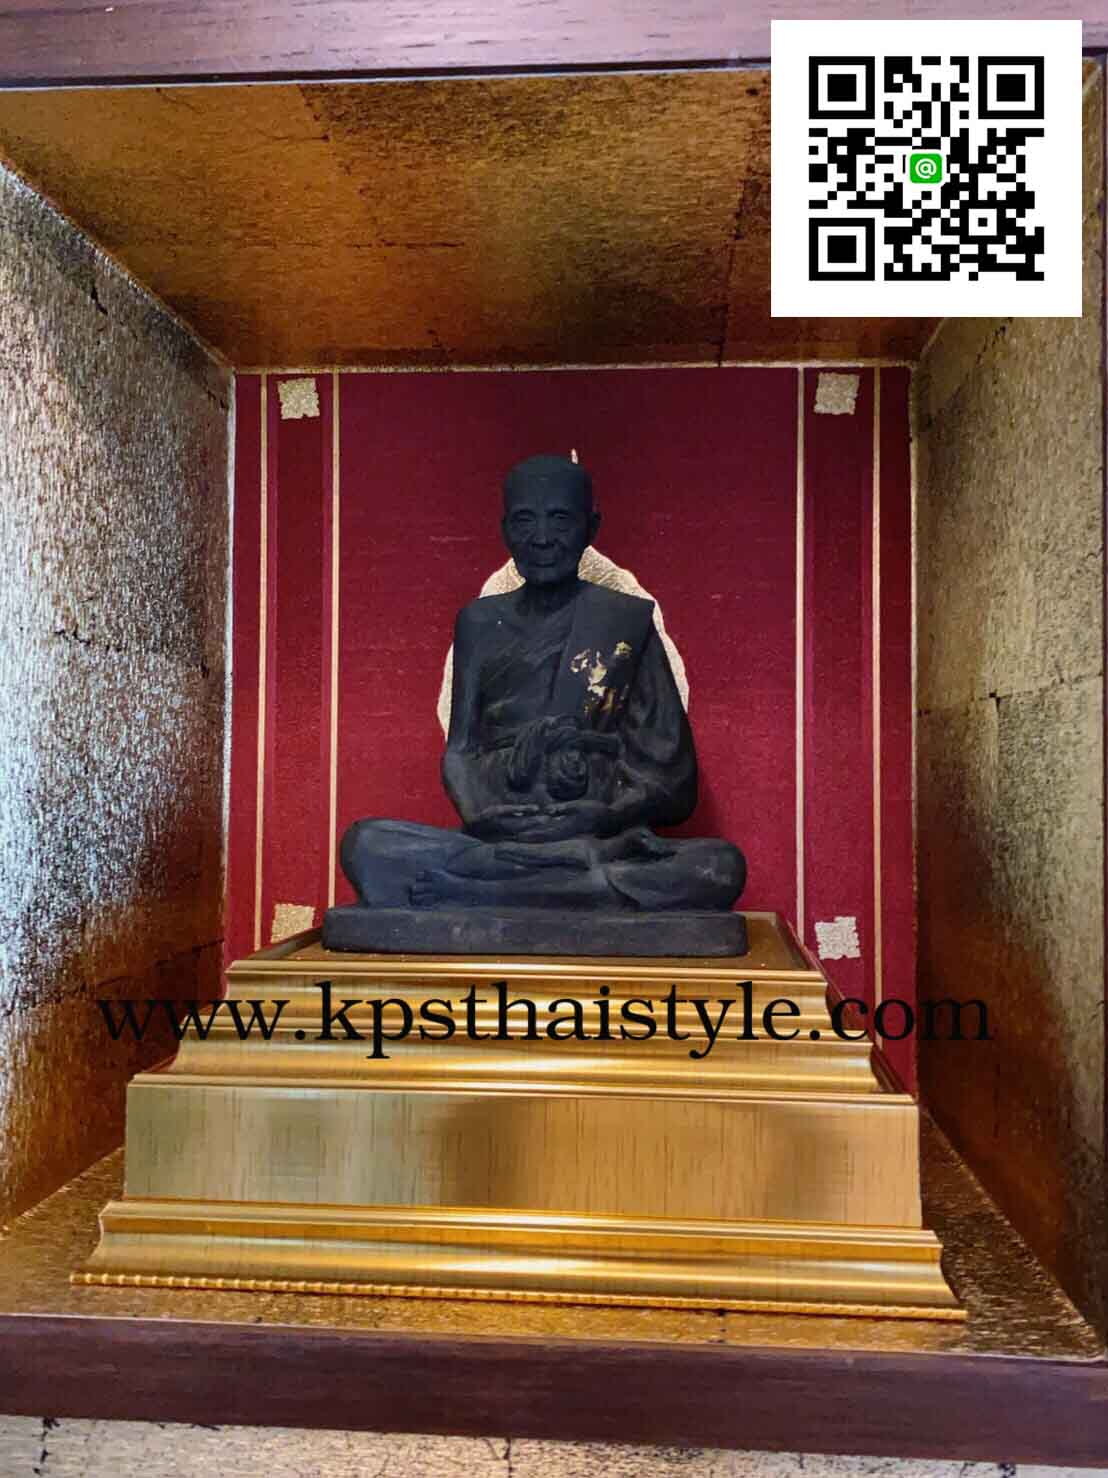 Kpsthaistyle, ตู้ใส่พระ, ตู้ครอบพระ, ตู้ใส่พระพุทธรูป, ตู้ครอบพระบูชา, ฐานวางพระ 0809842756 คุณสมคิด